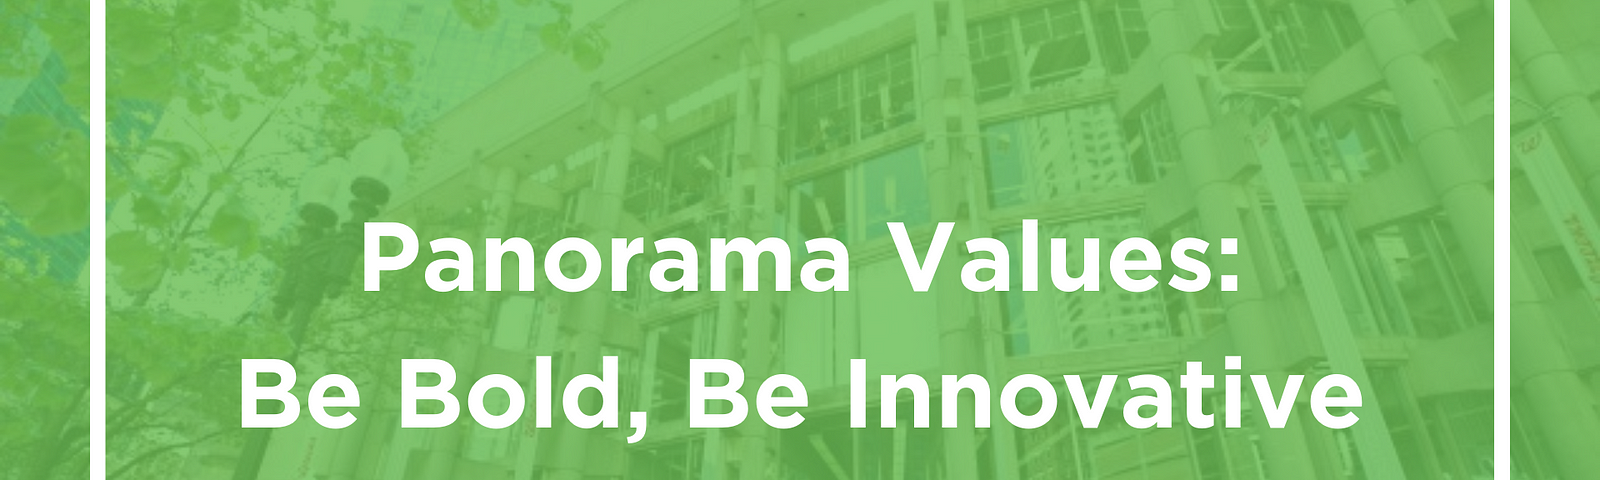 Panorama Values: Be Bold, Be Innovative